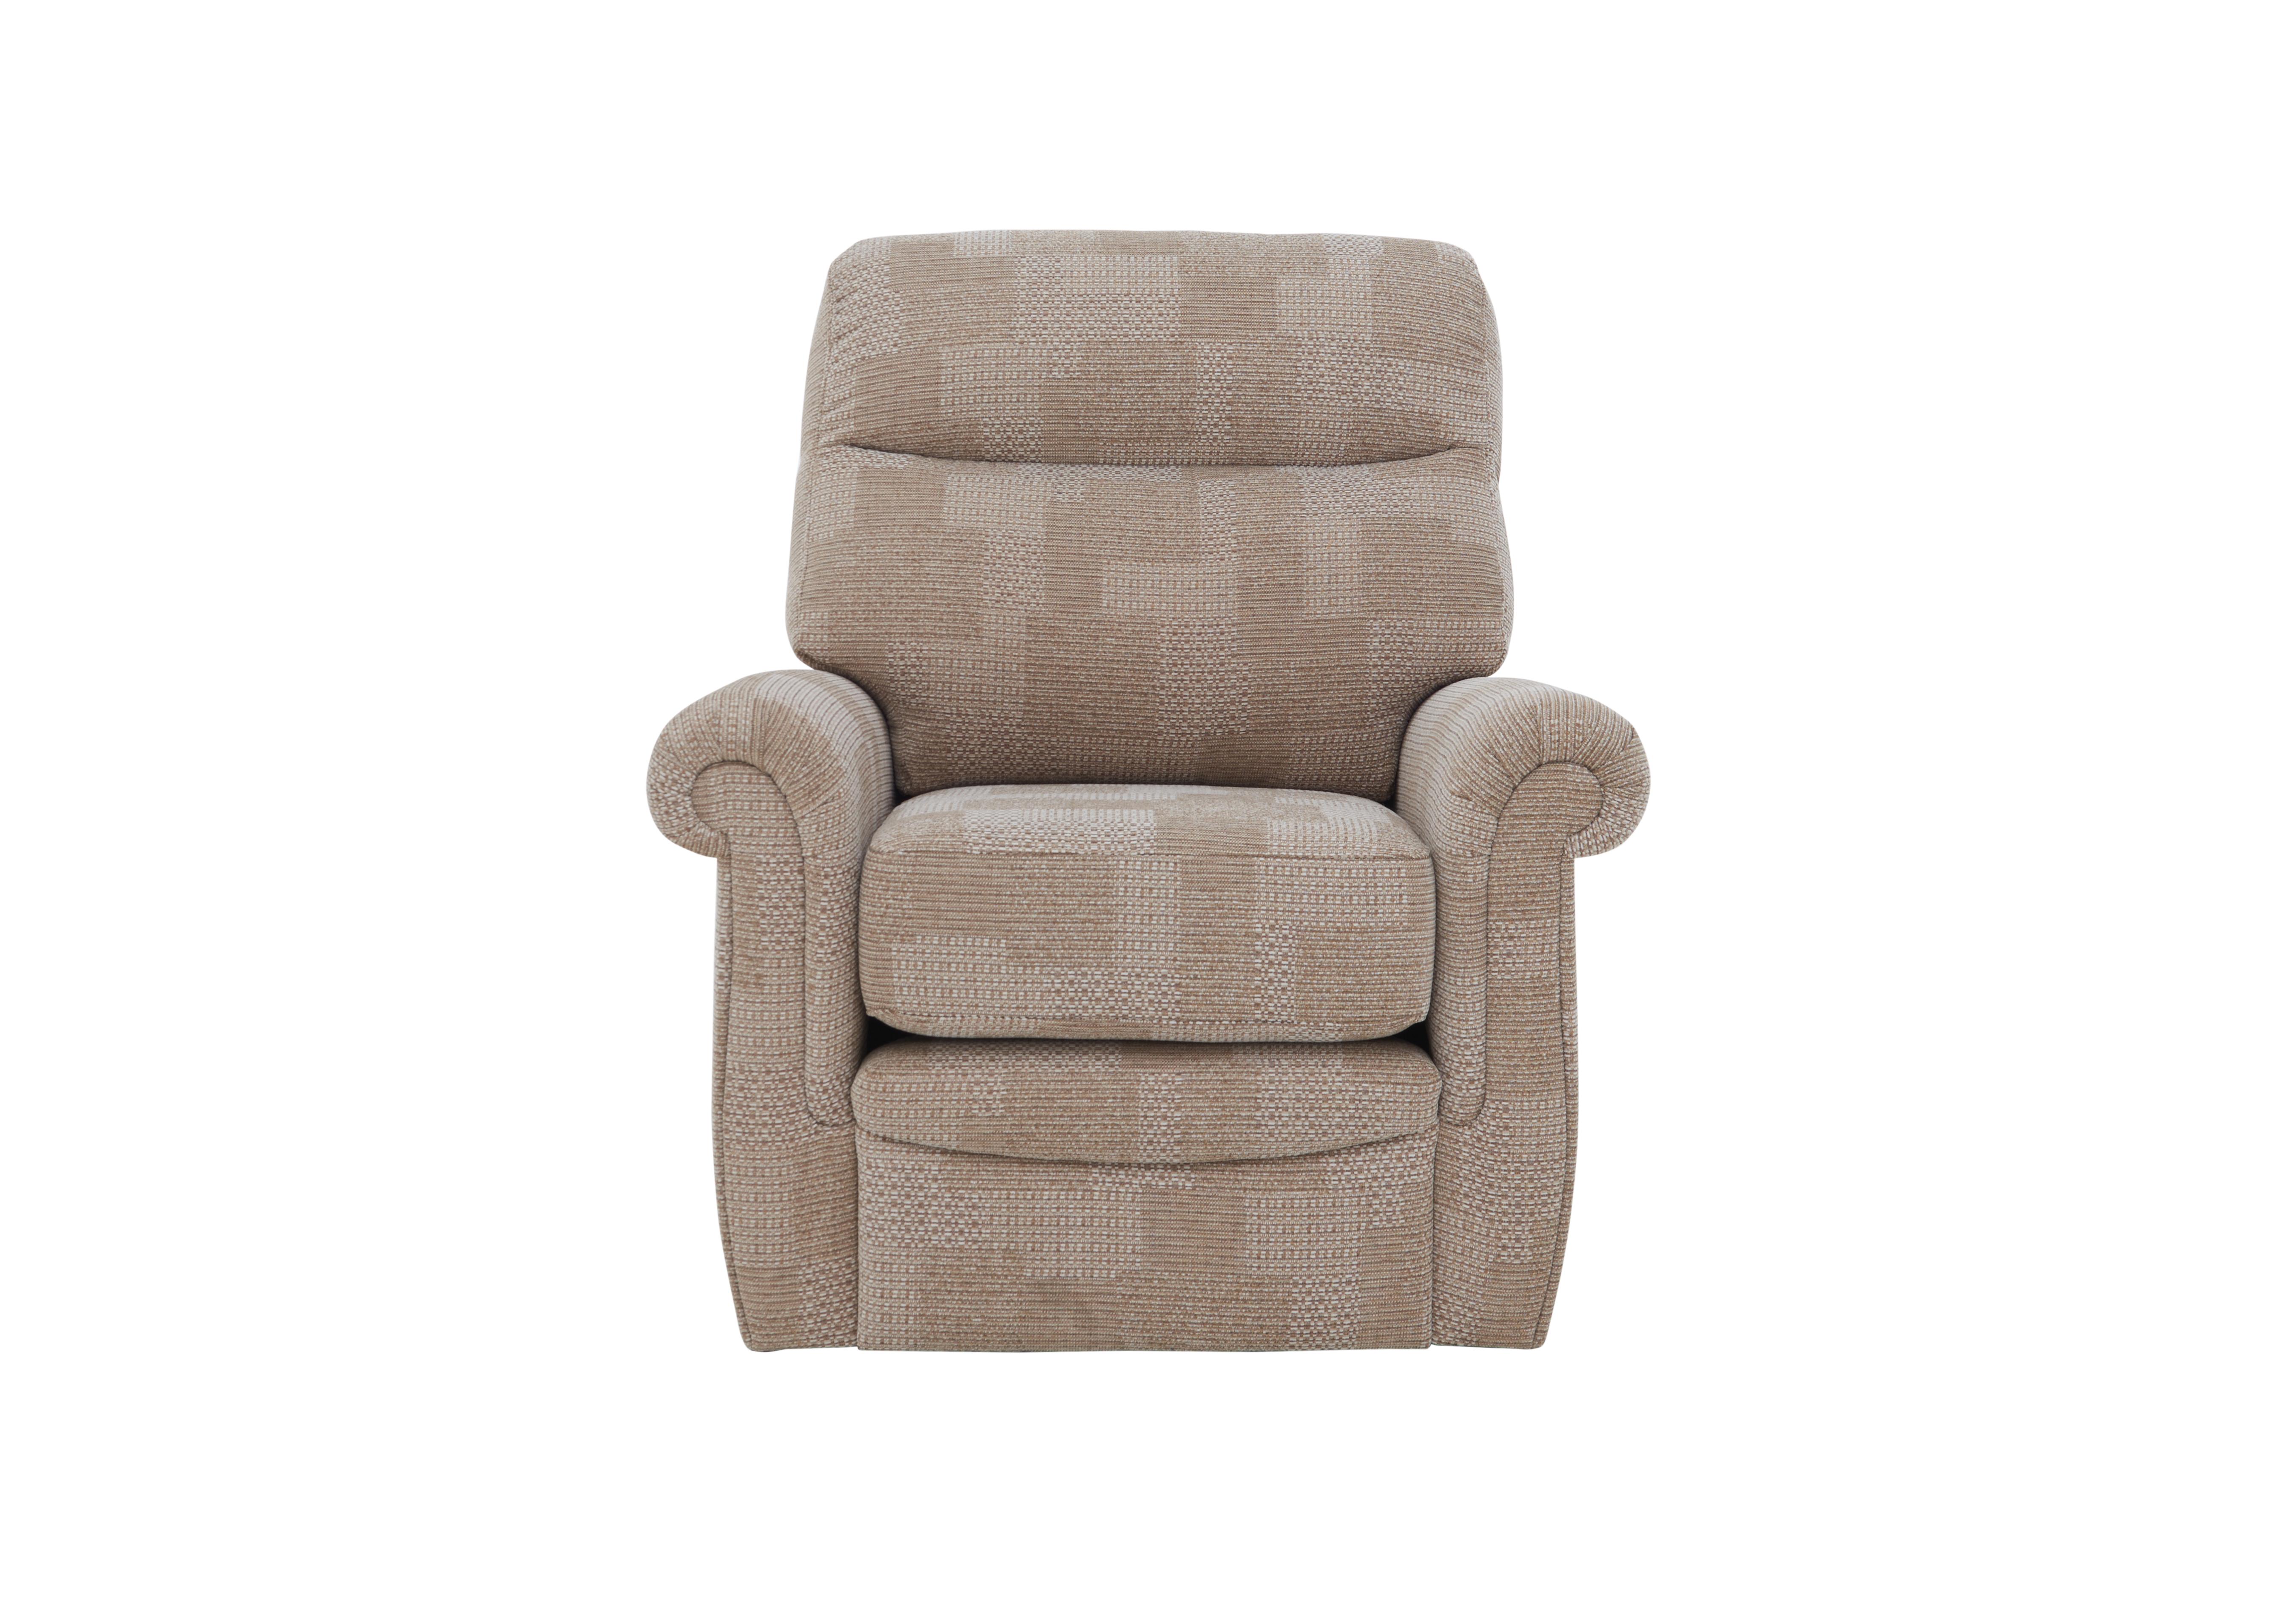 Avon Fabric Armchair in A800 Faro Sand on Furniture Village